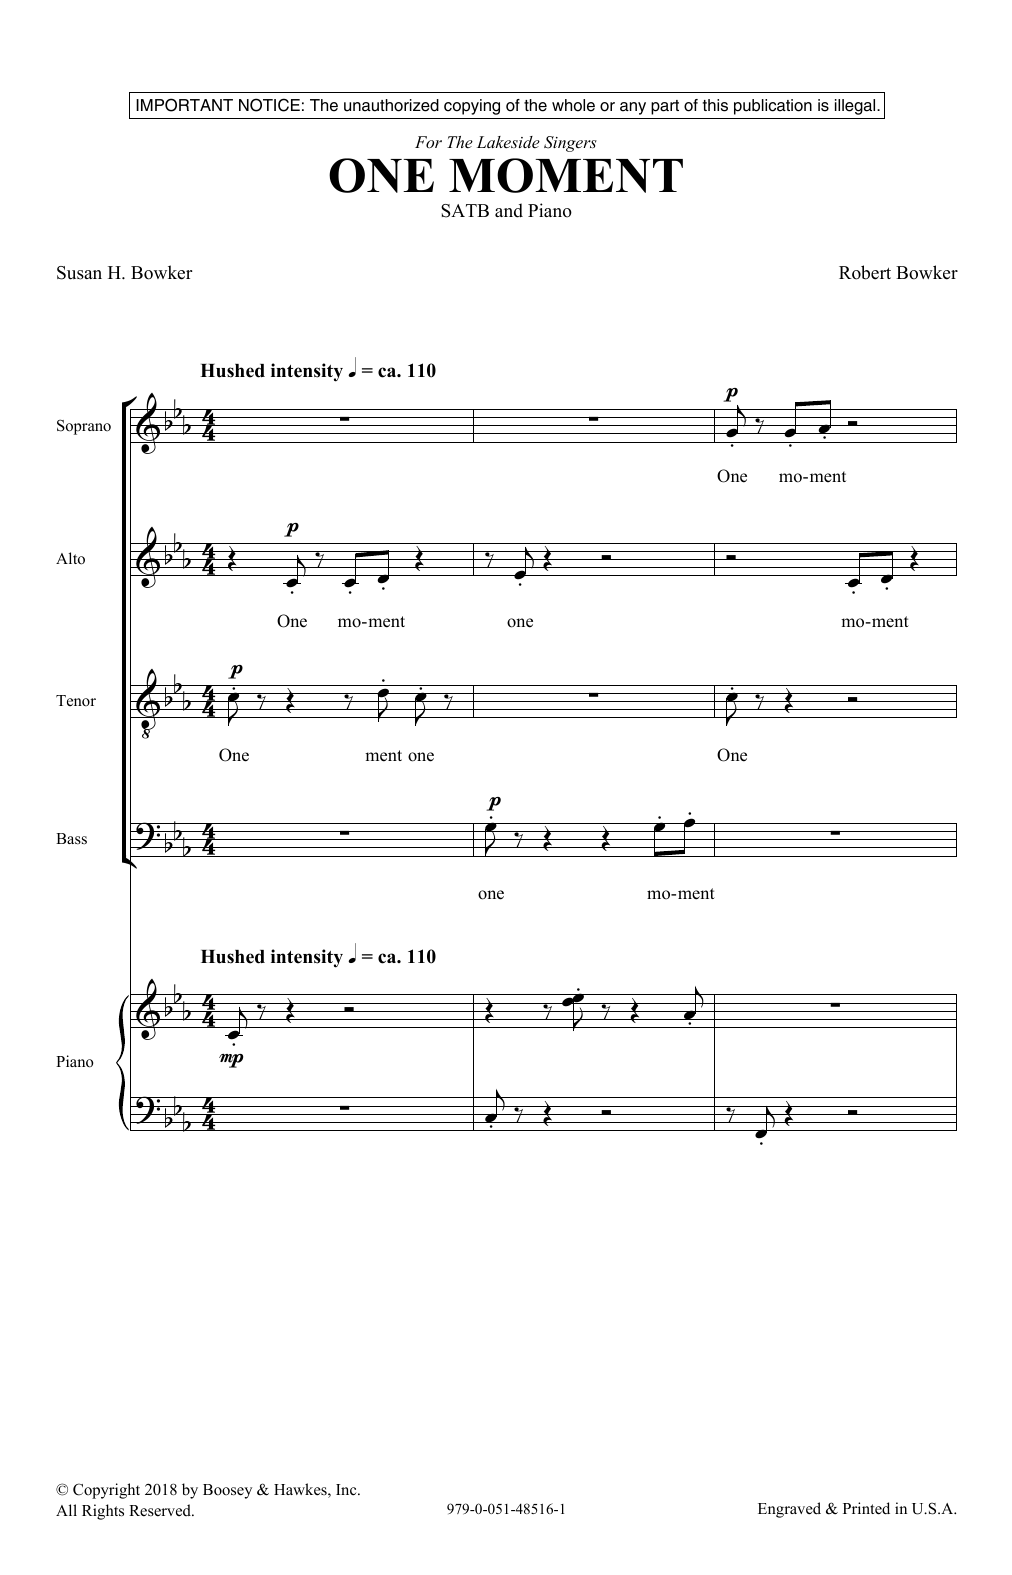 Susan Bowker & Robert Bowker One Moment Sheet Music Notes & Chords for SATB Choir - Download or Print PDF